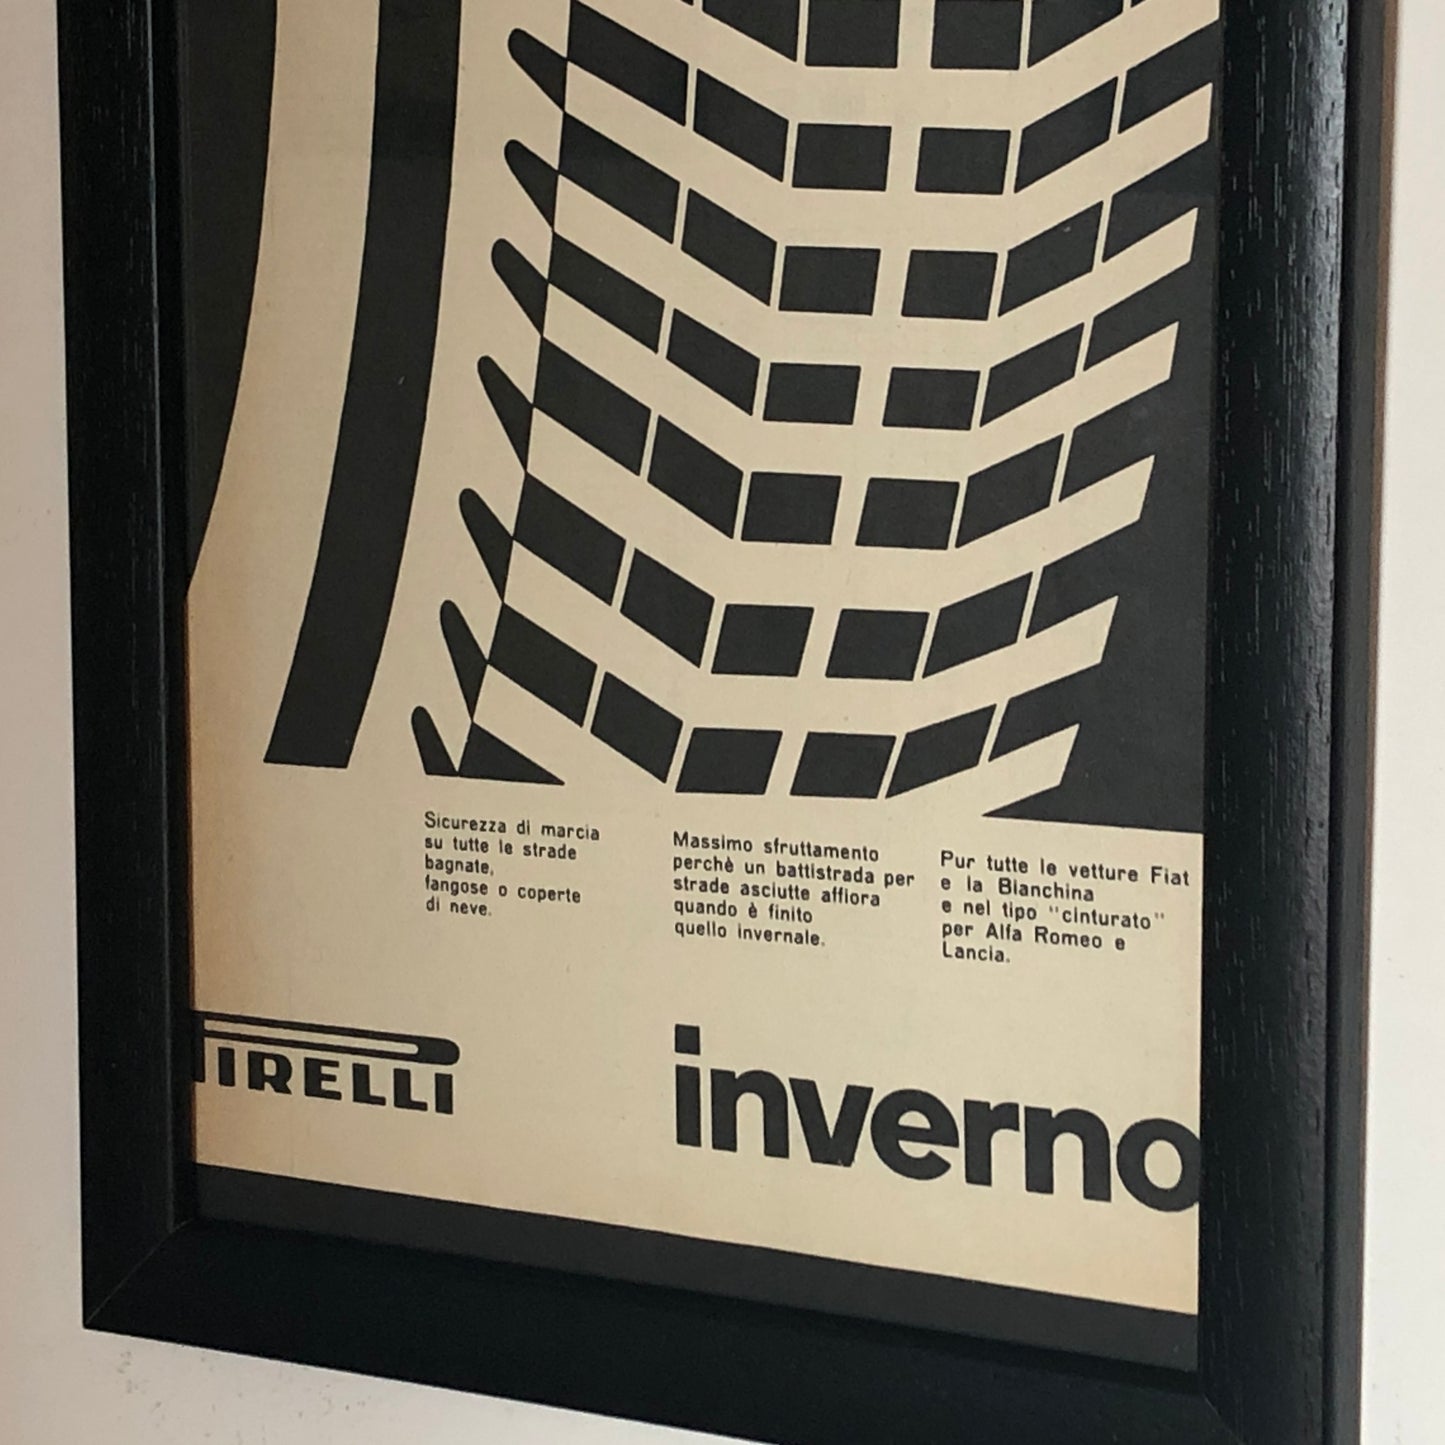 Pirelli, Advertising Year 1960 Pirelli Winter Tires